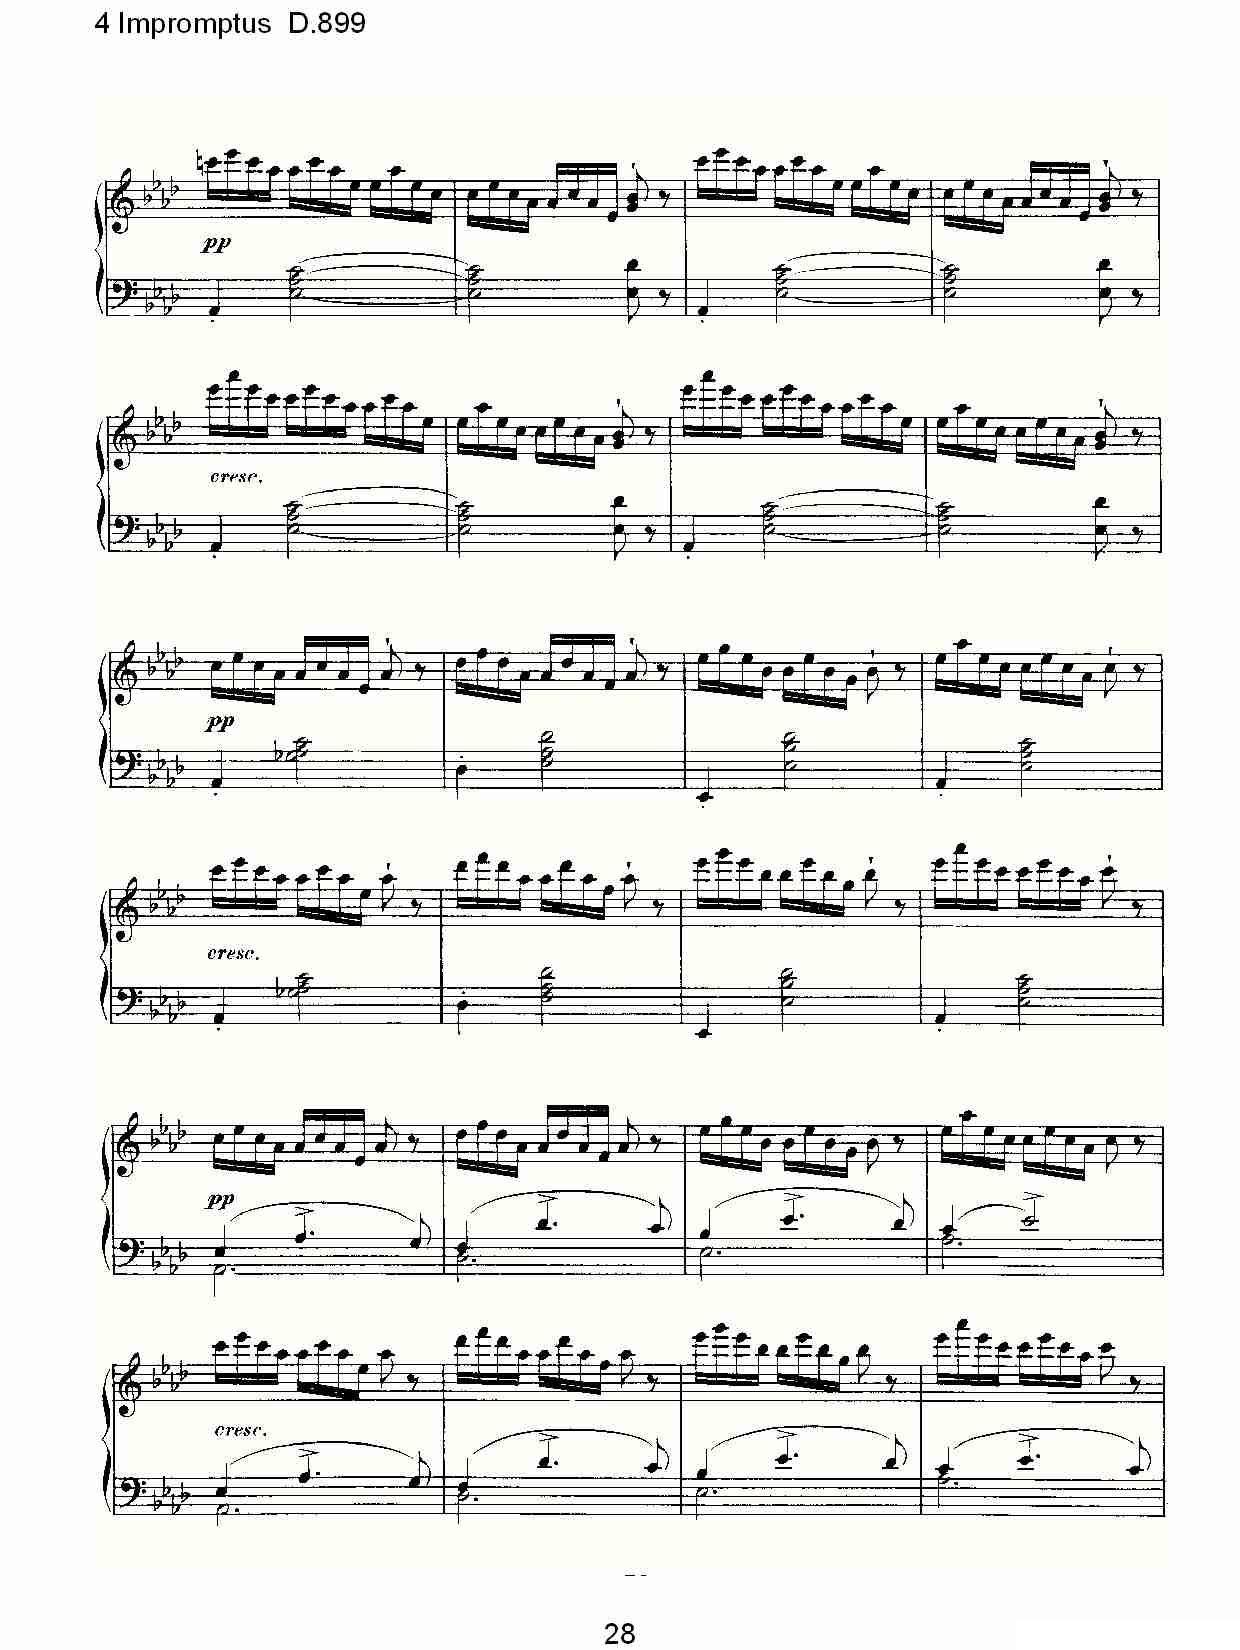 4 Impromptus D.899（4人即兴演奏 D.899）钢琴曲谱（图28）